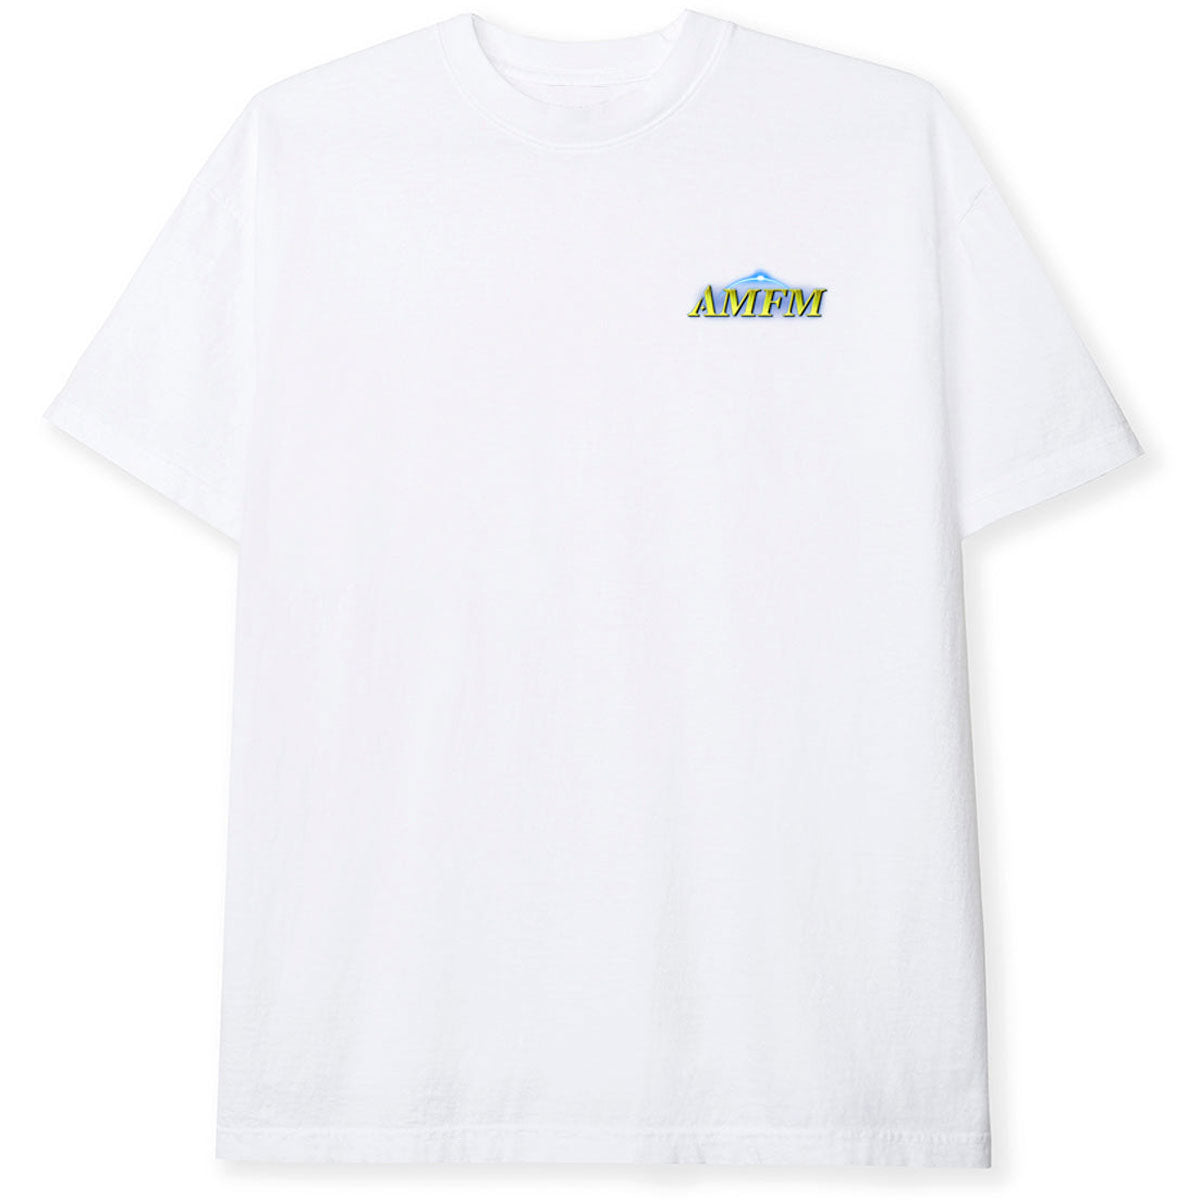 AM-FM DVC T-Shirt - White image 2